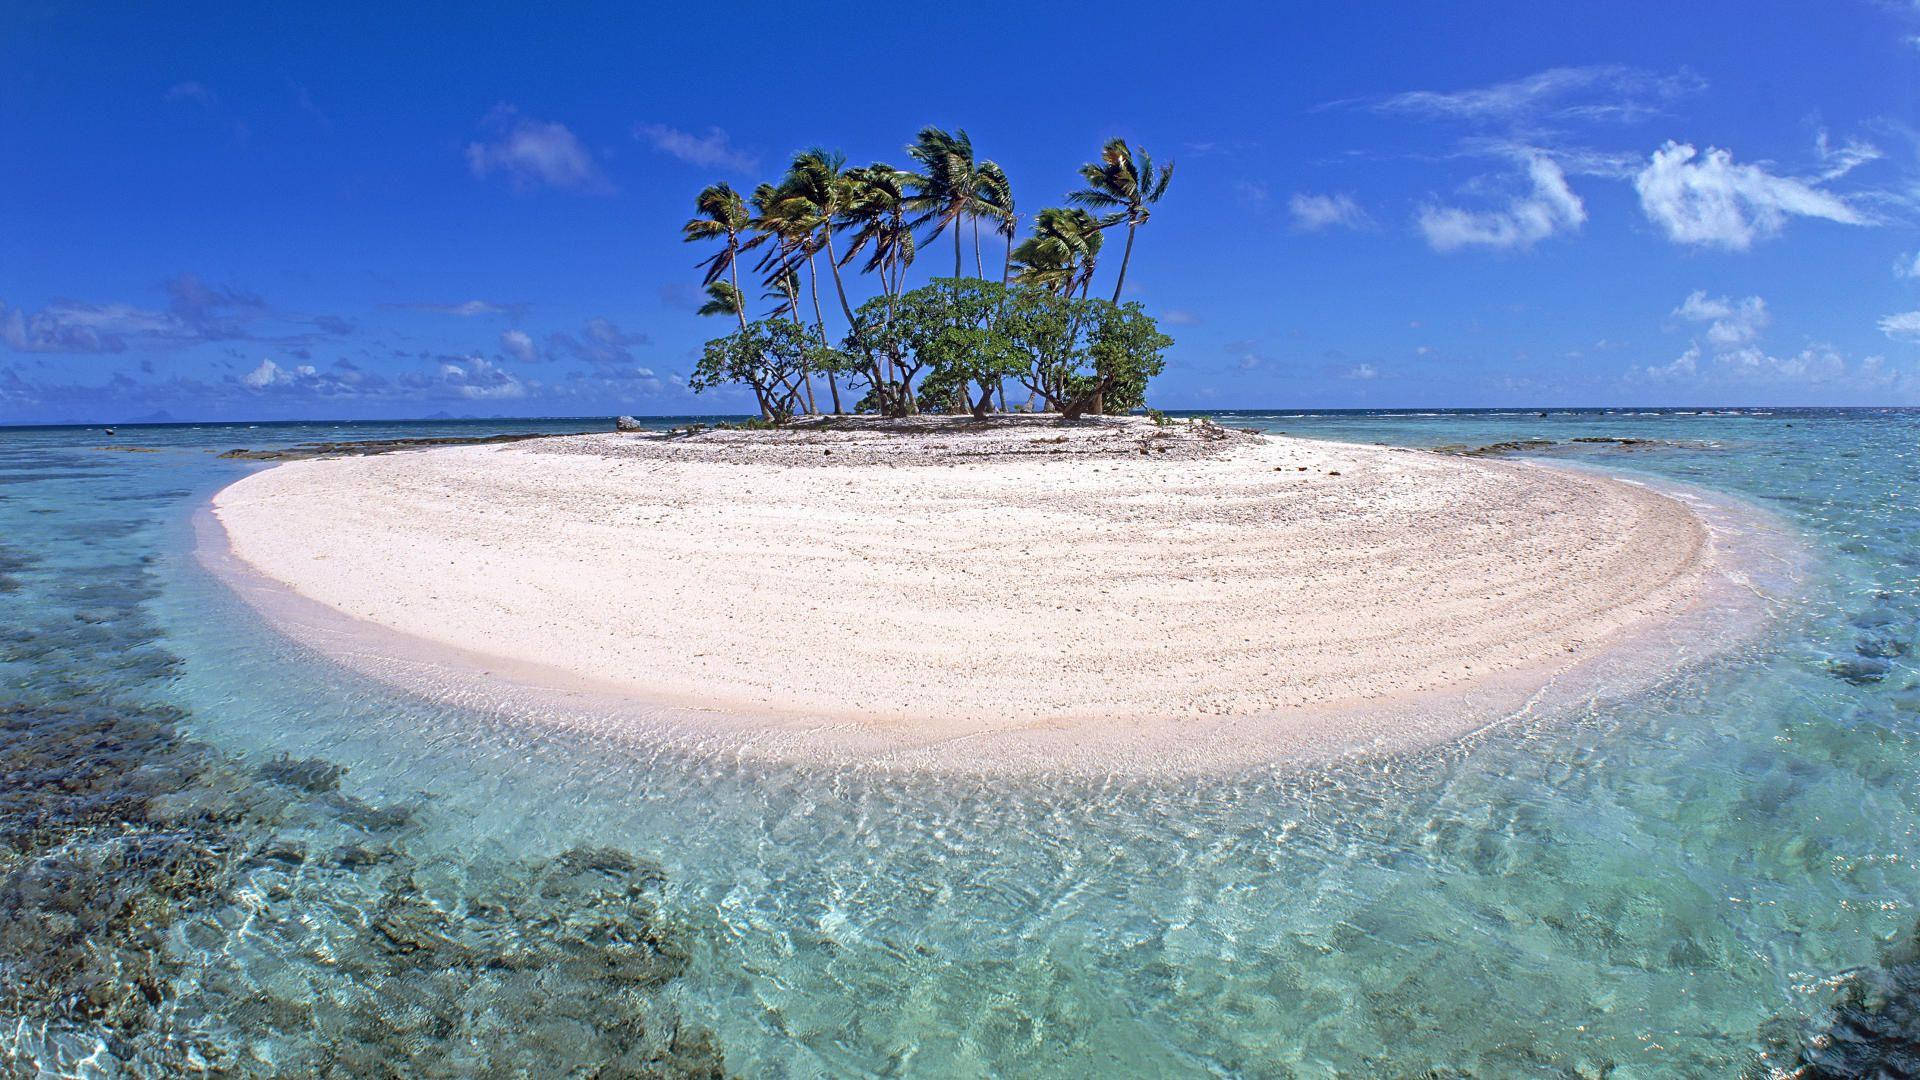 new Year nicotine Transparent Download Marshall Islands Bikini Atoll Wallpaper | Wallpapers.com